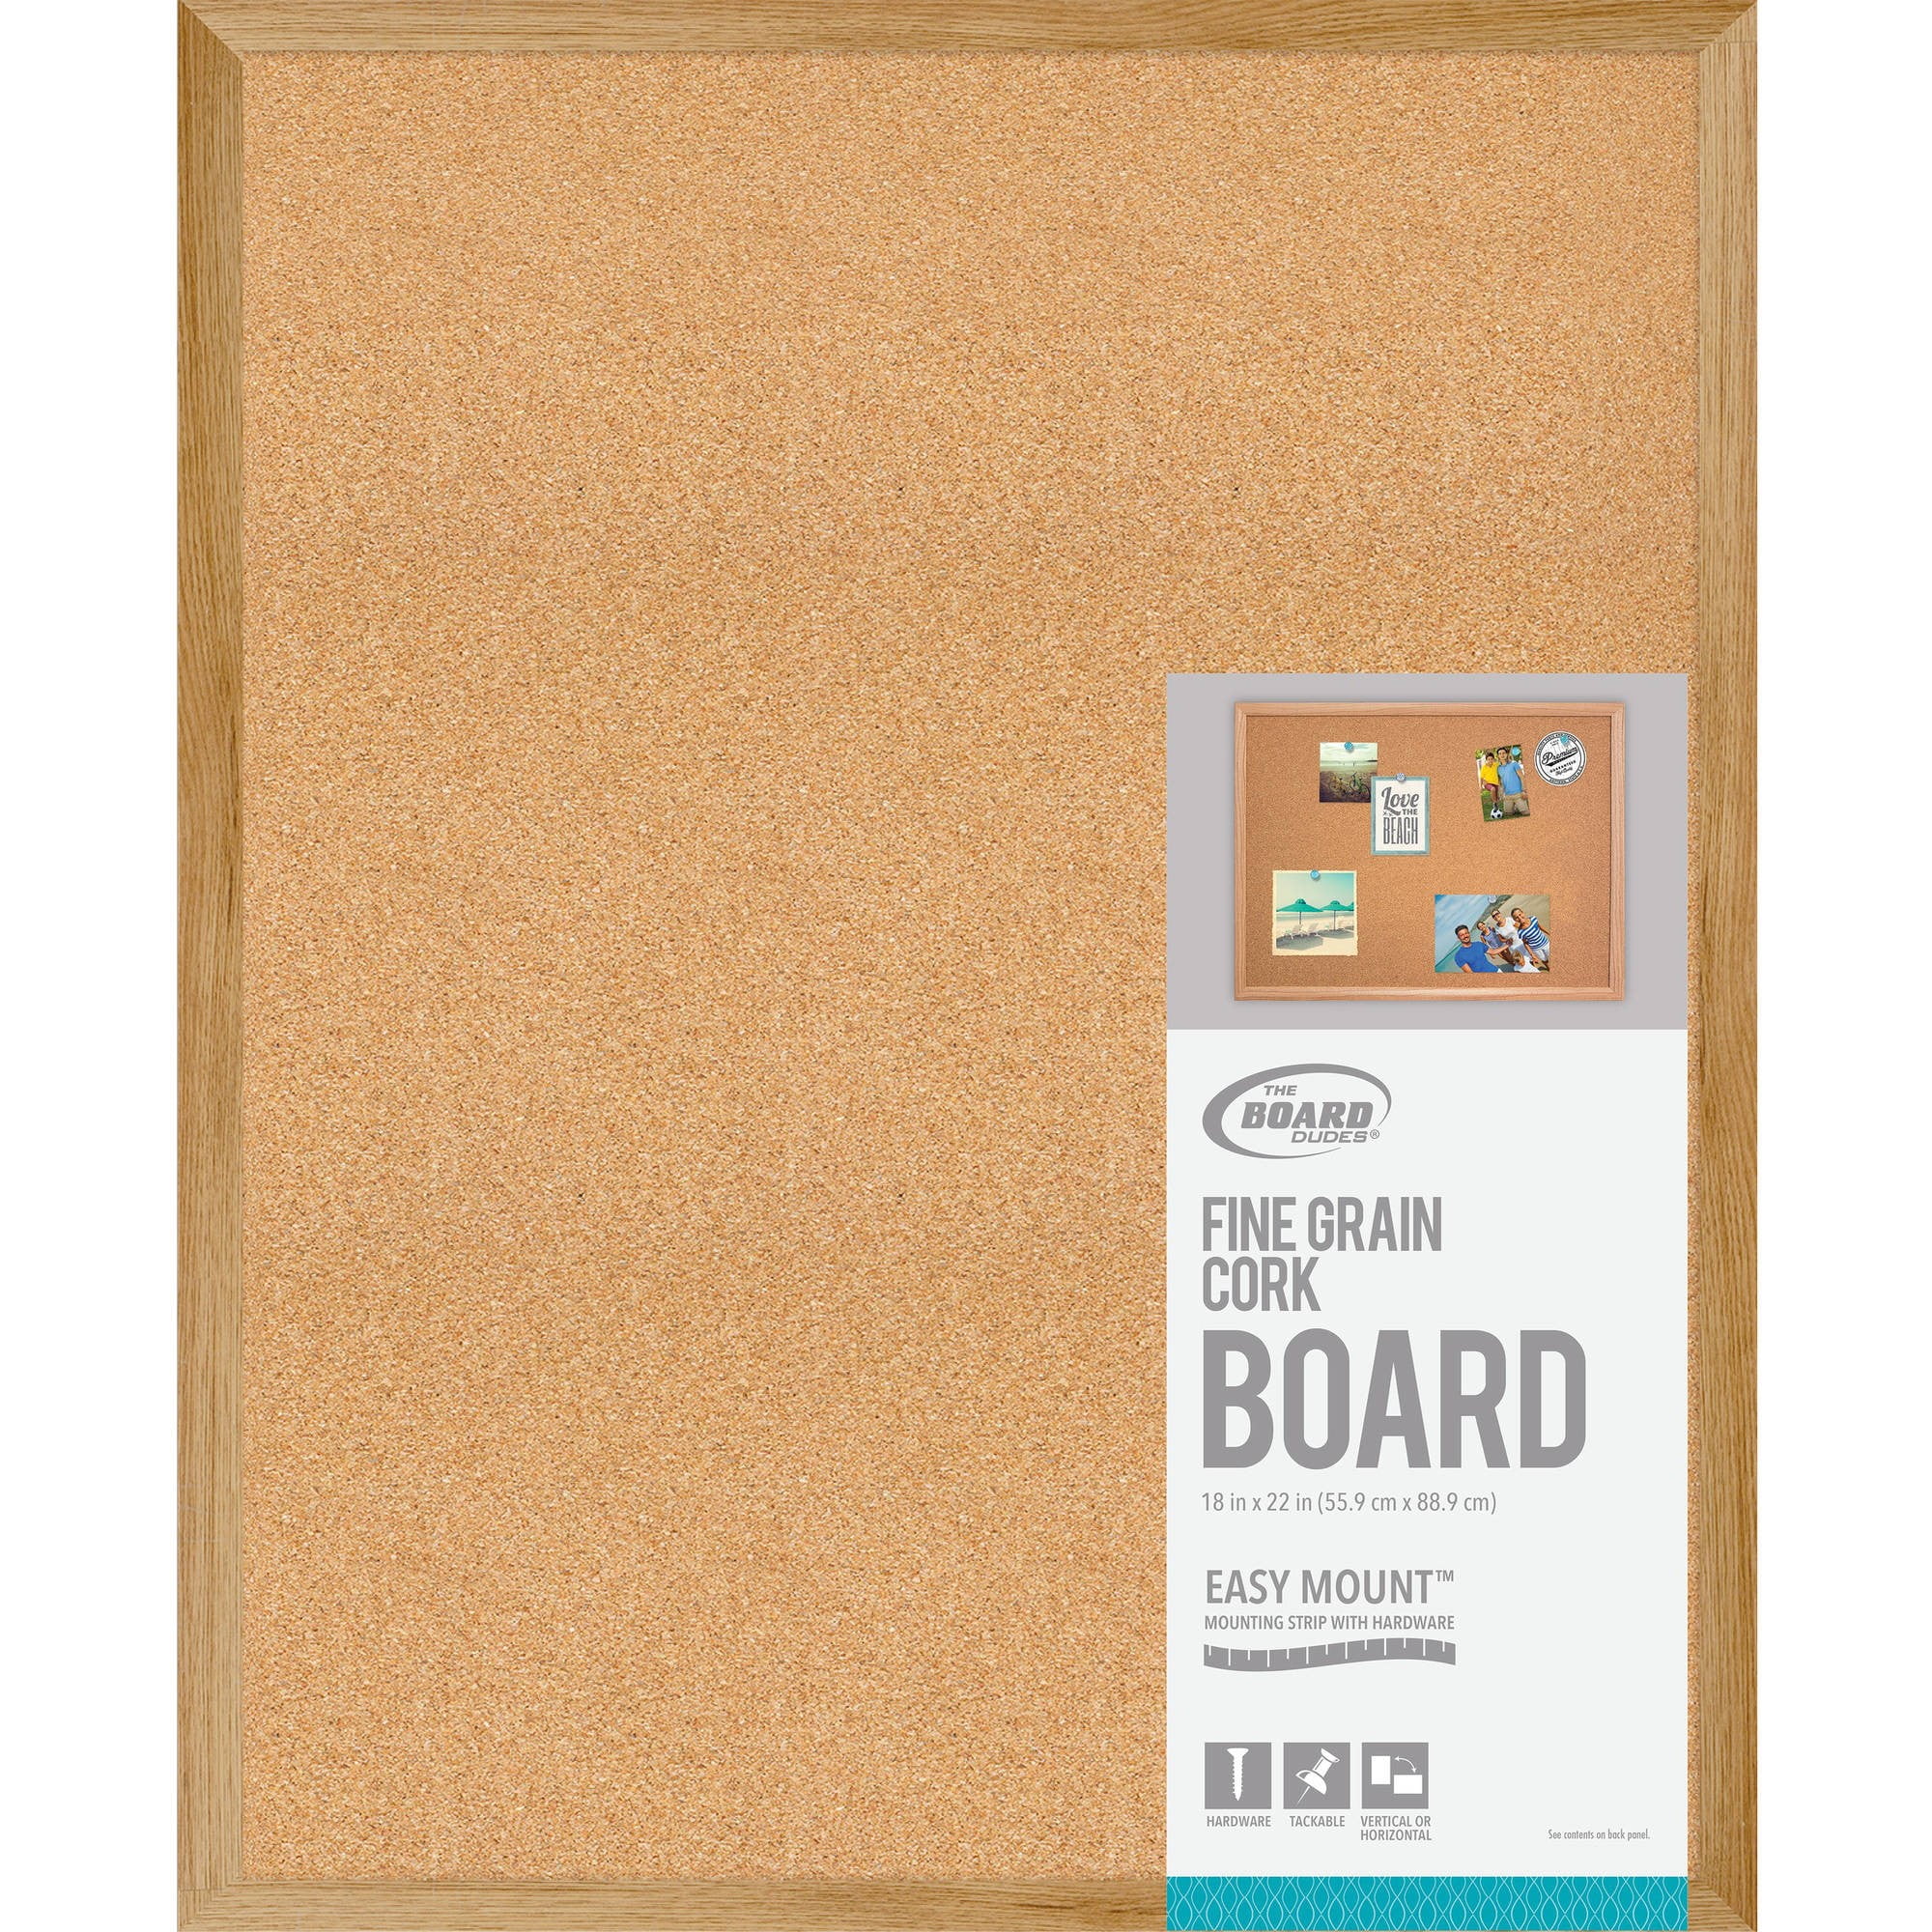 The Board Dudes Cork Tiles